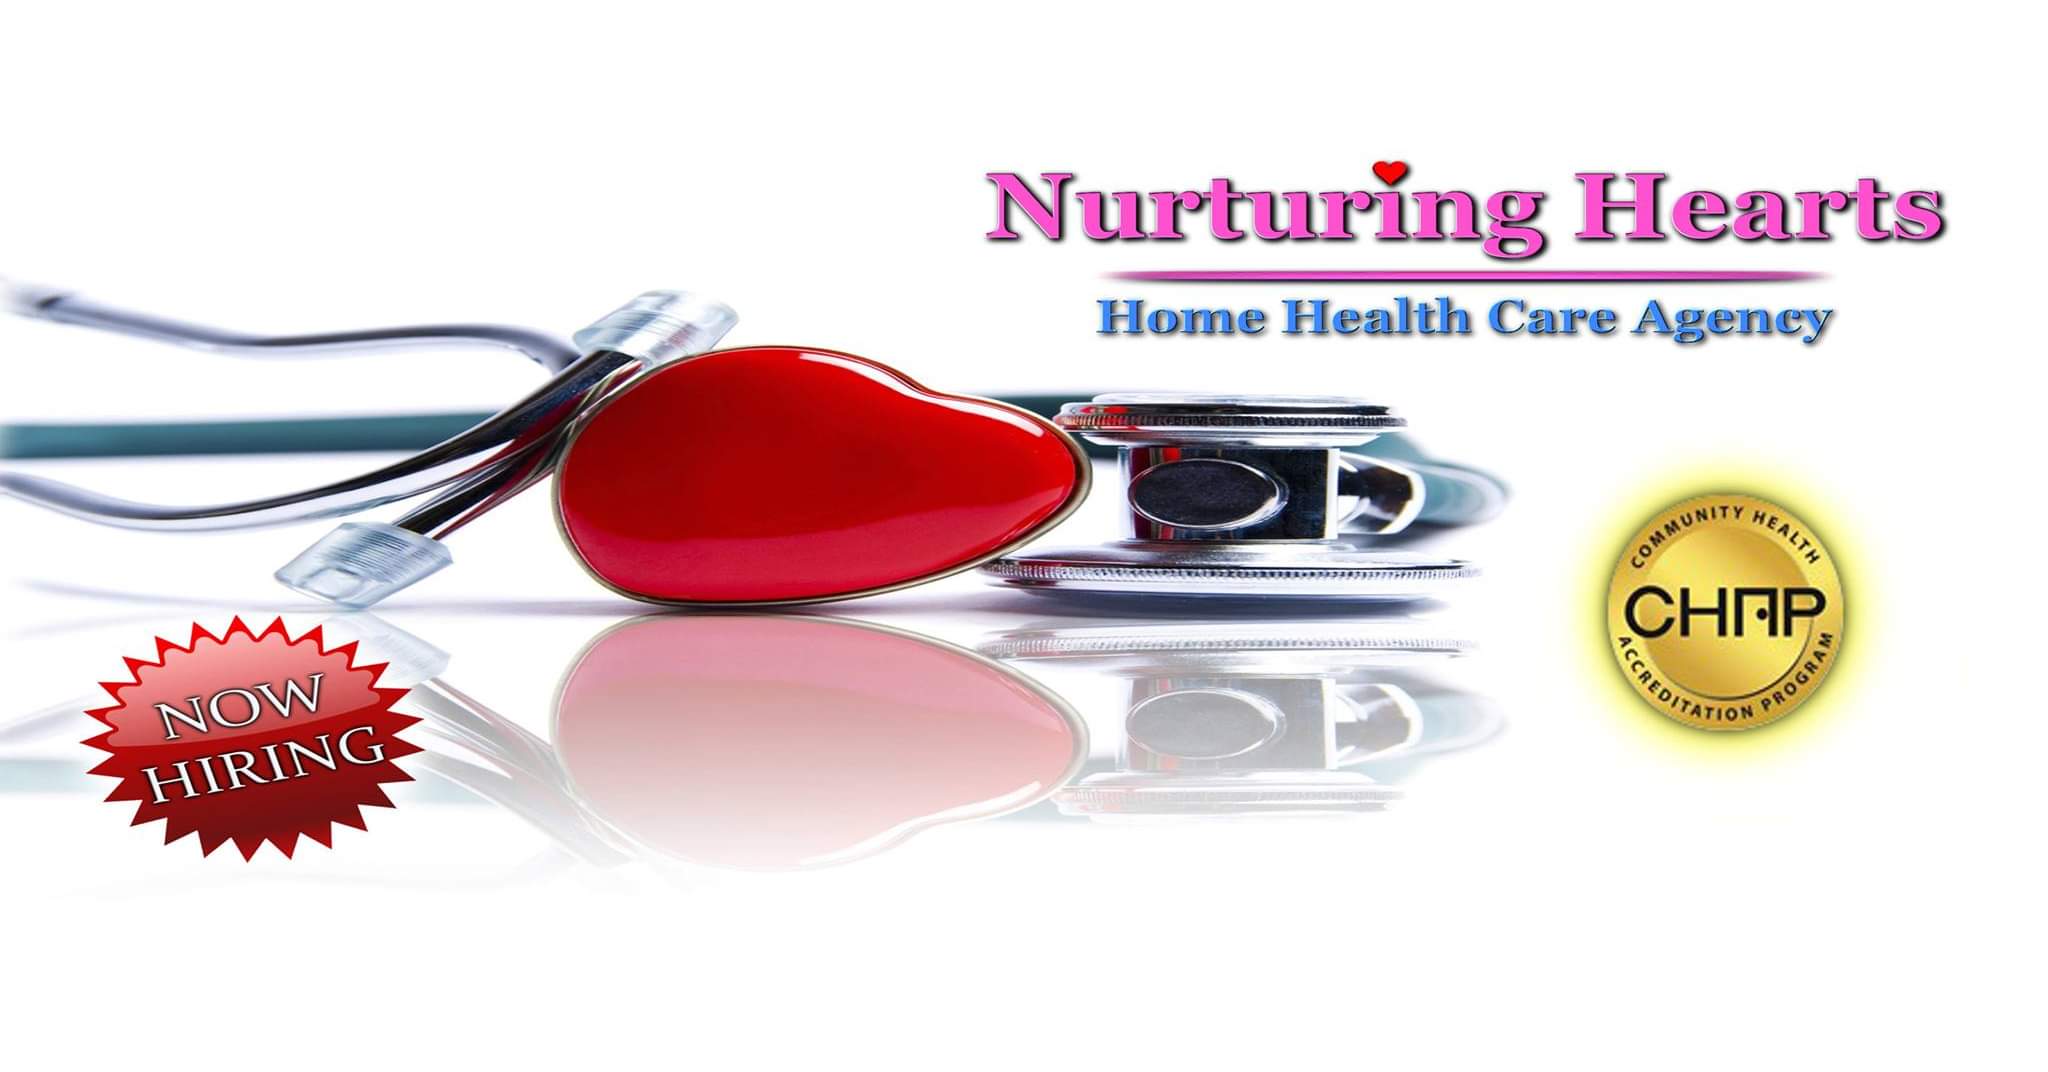 Nurturing Hearts Home Health Care Agency